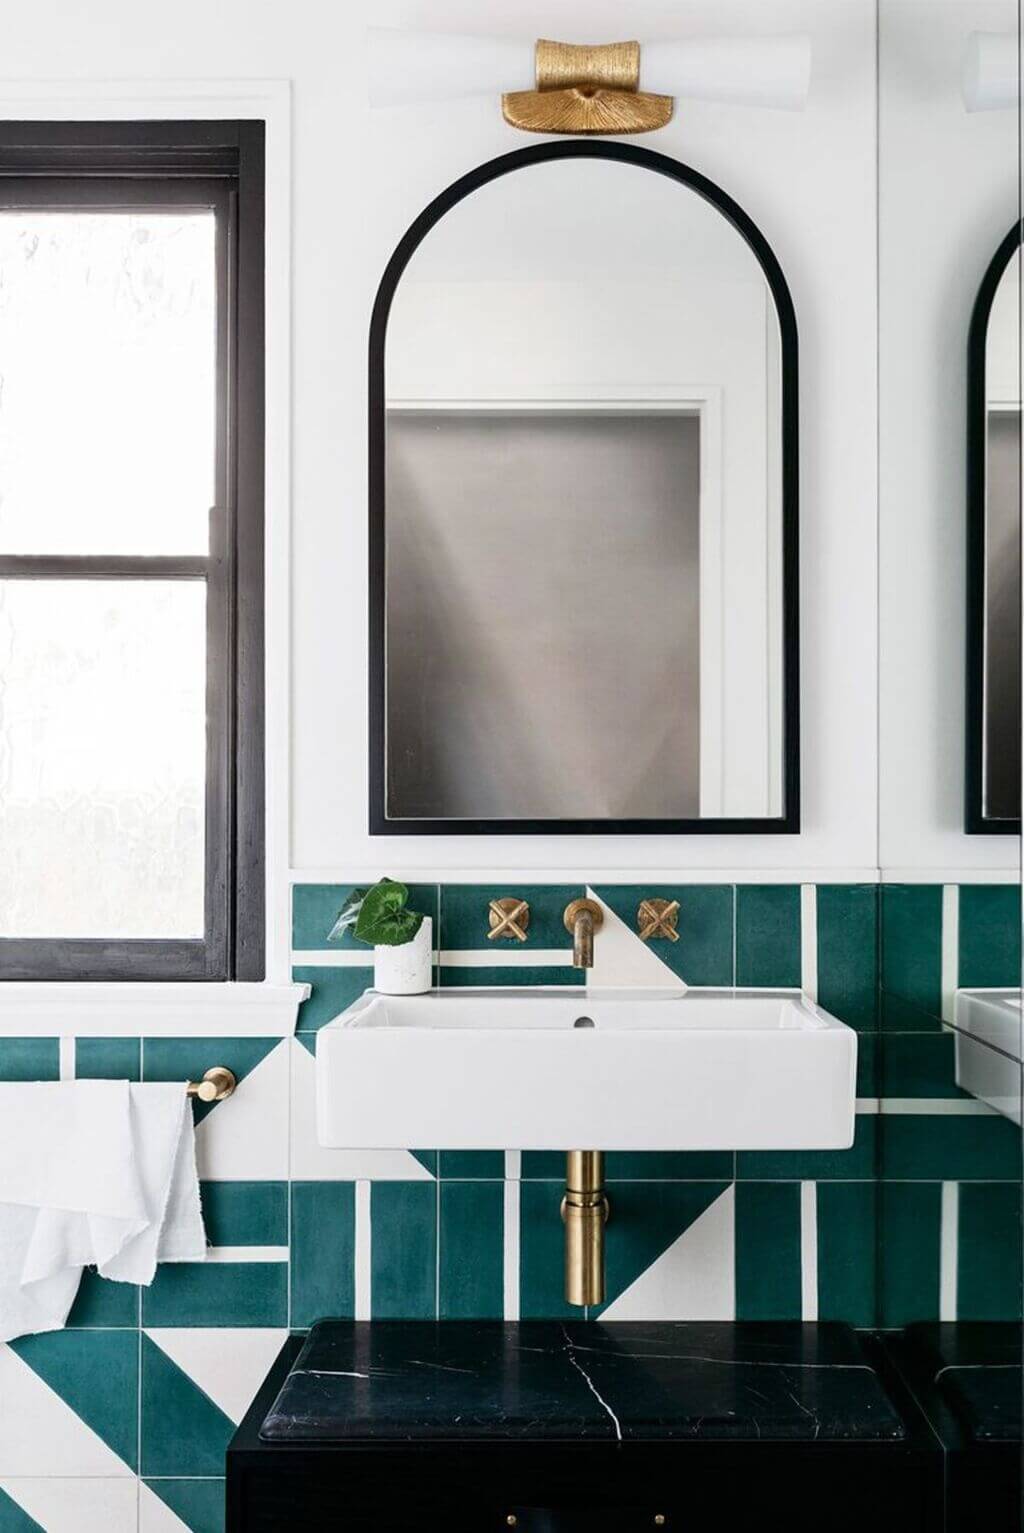 3’s Rule for bathroom tiles design